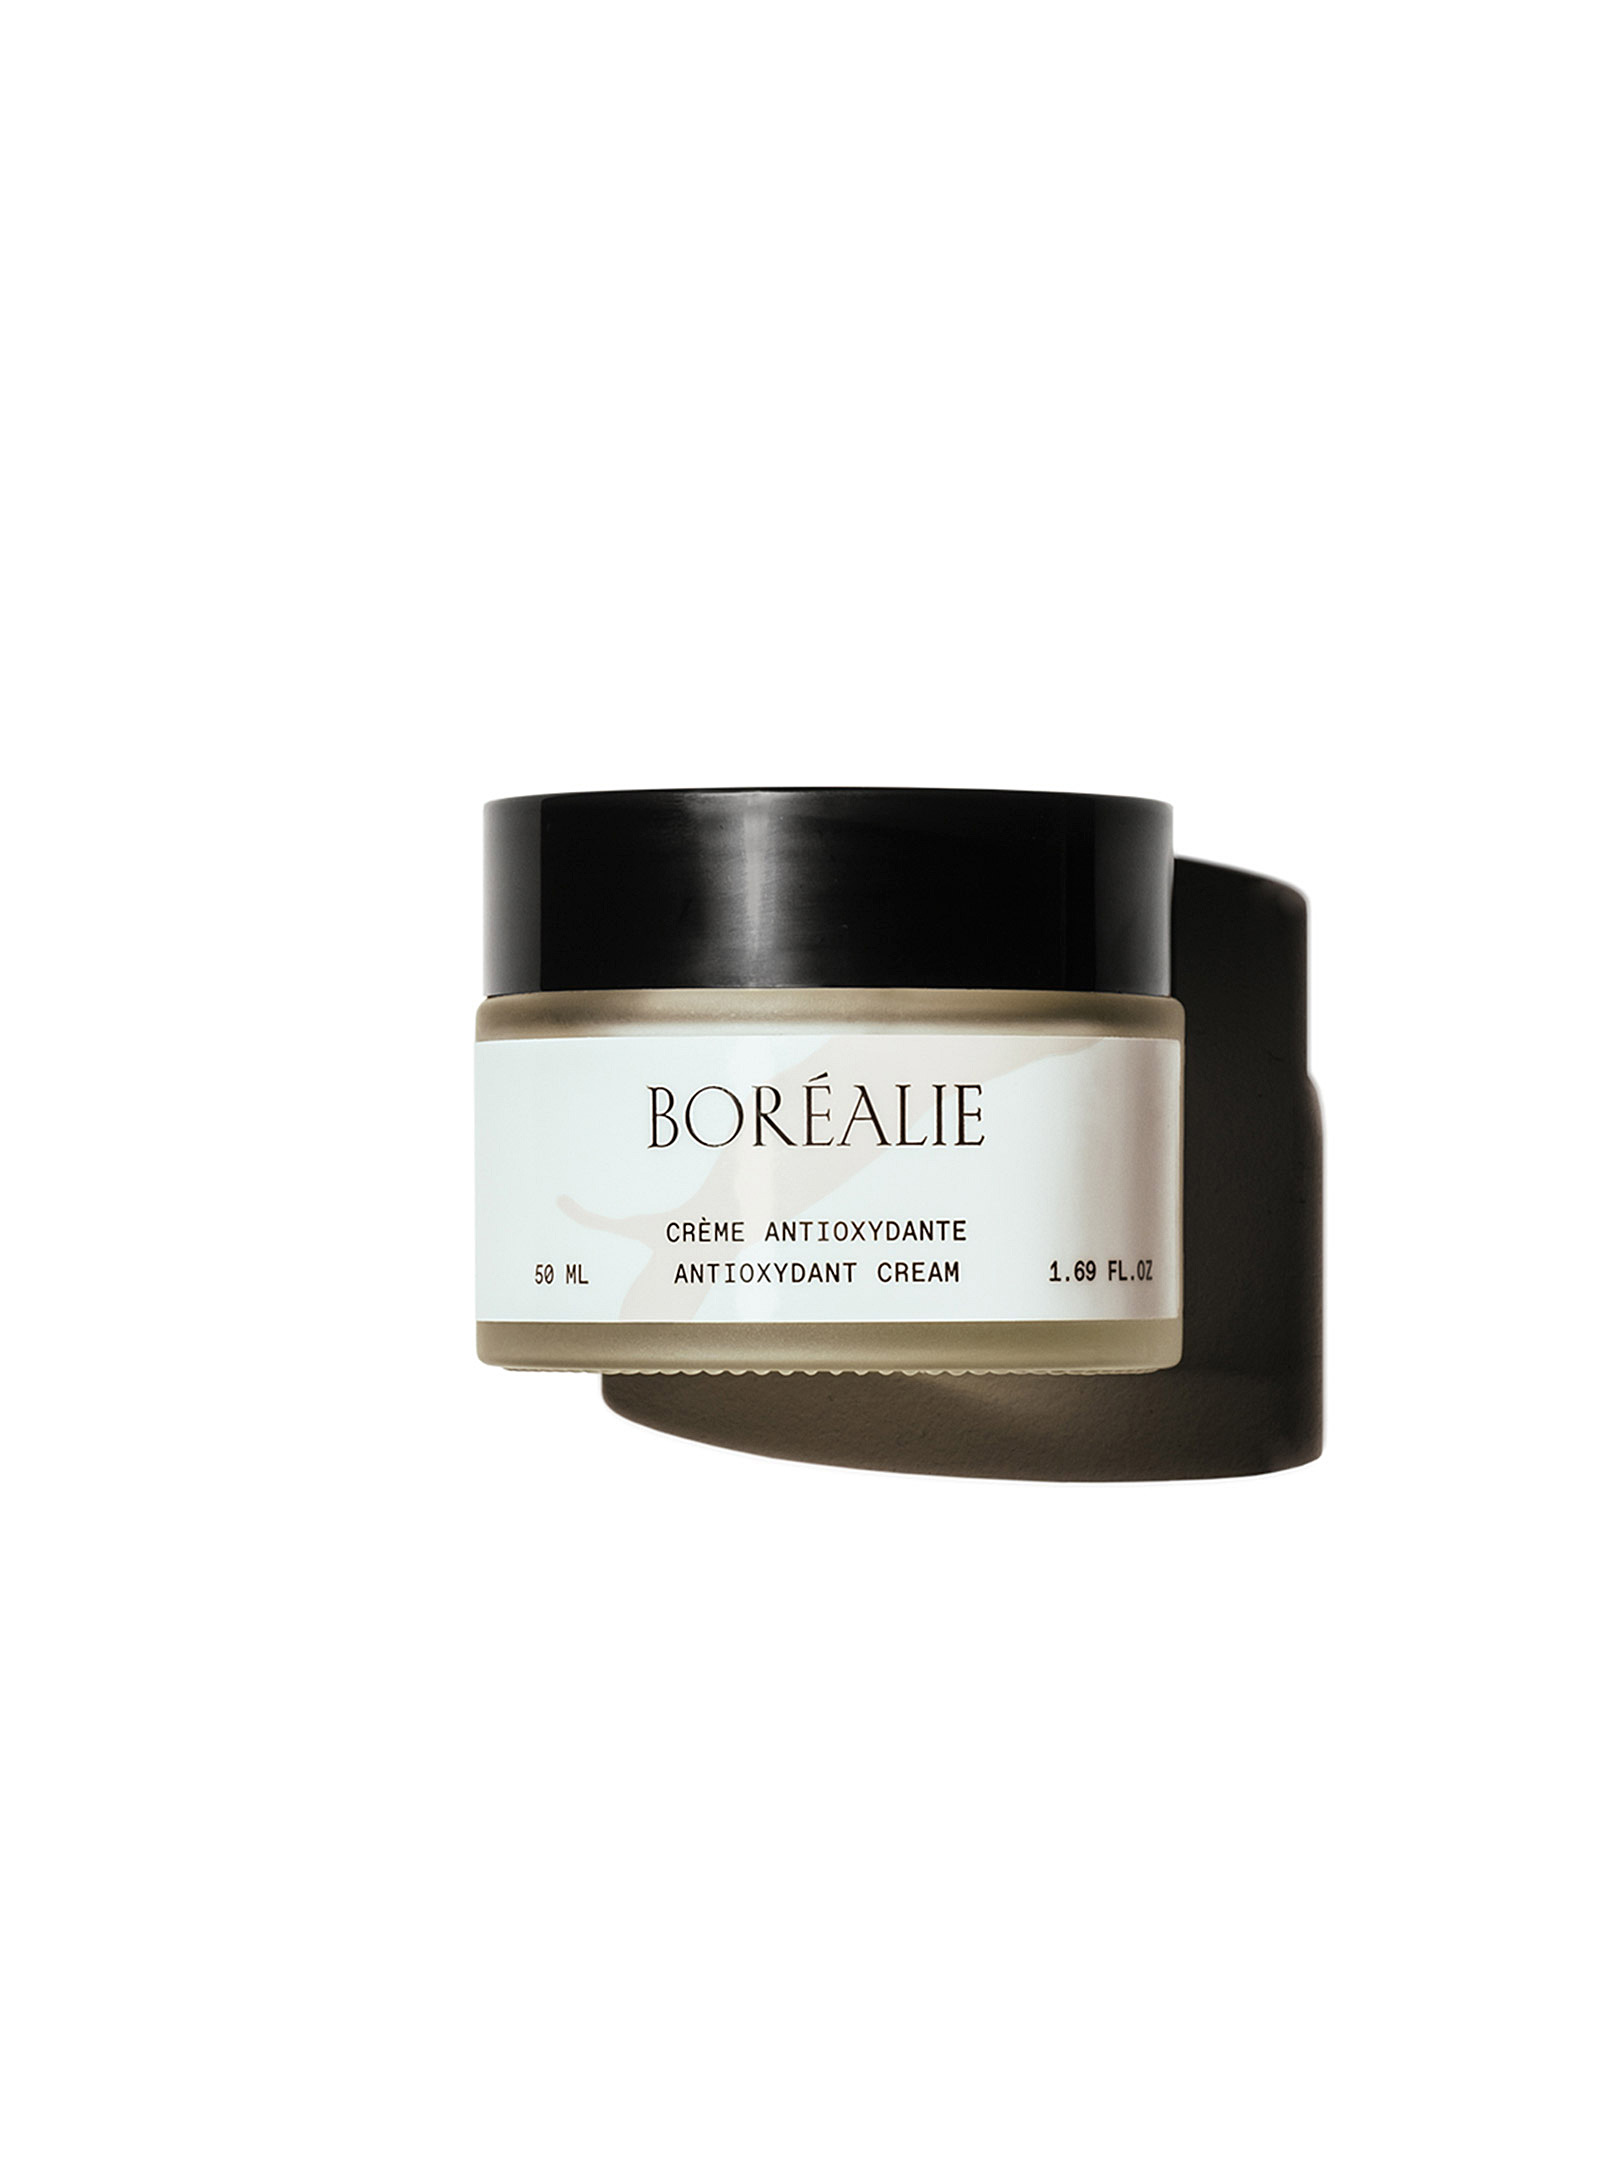 Boréalie - La crème antioxydante baudrier de Neptune